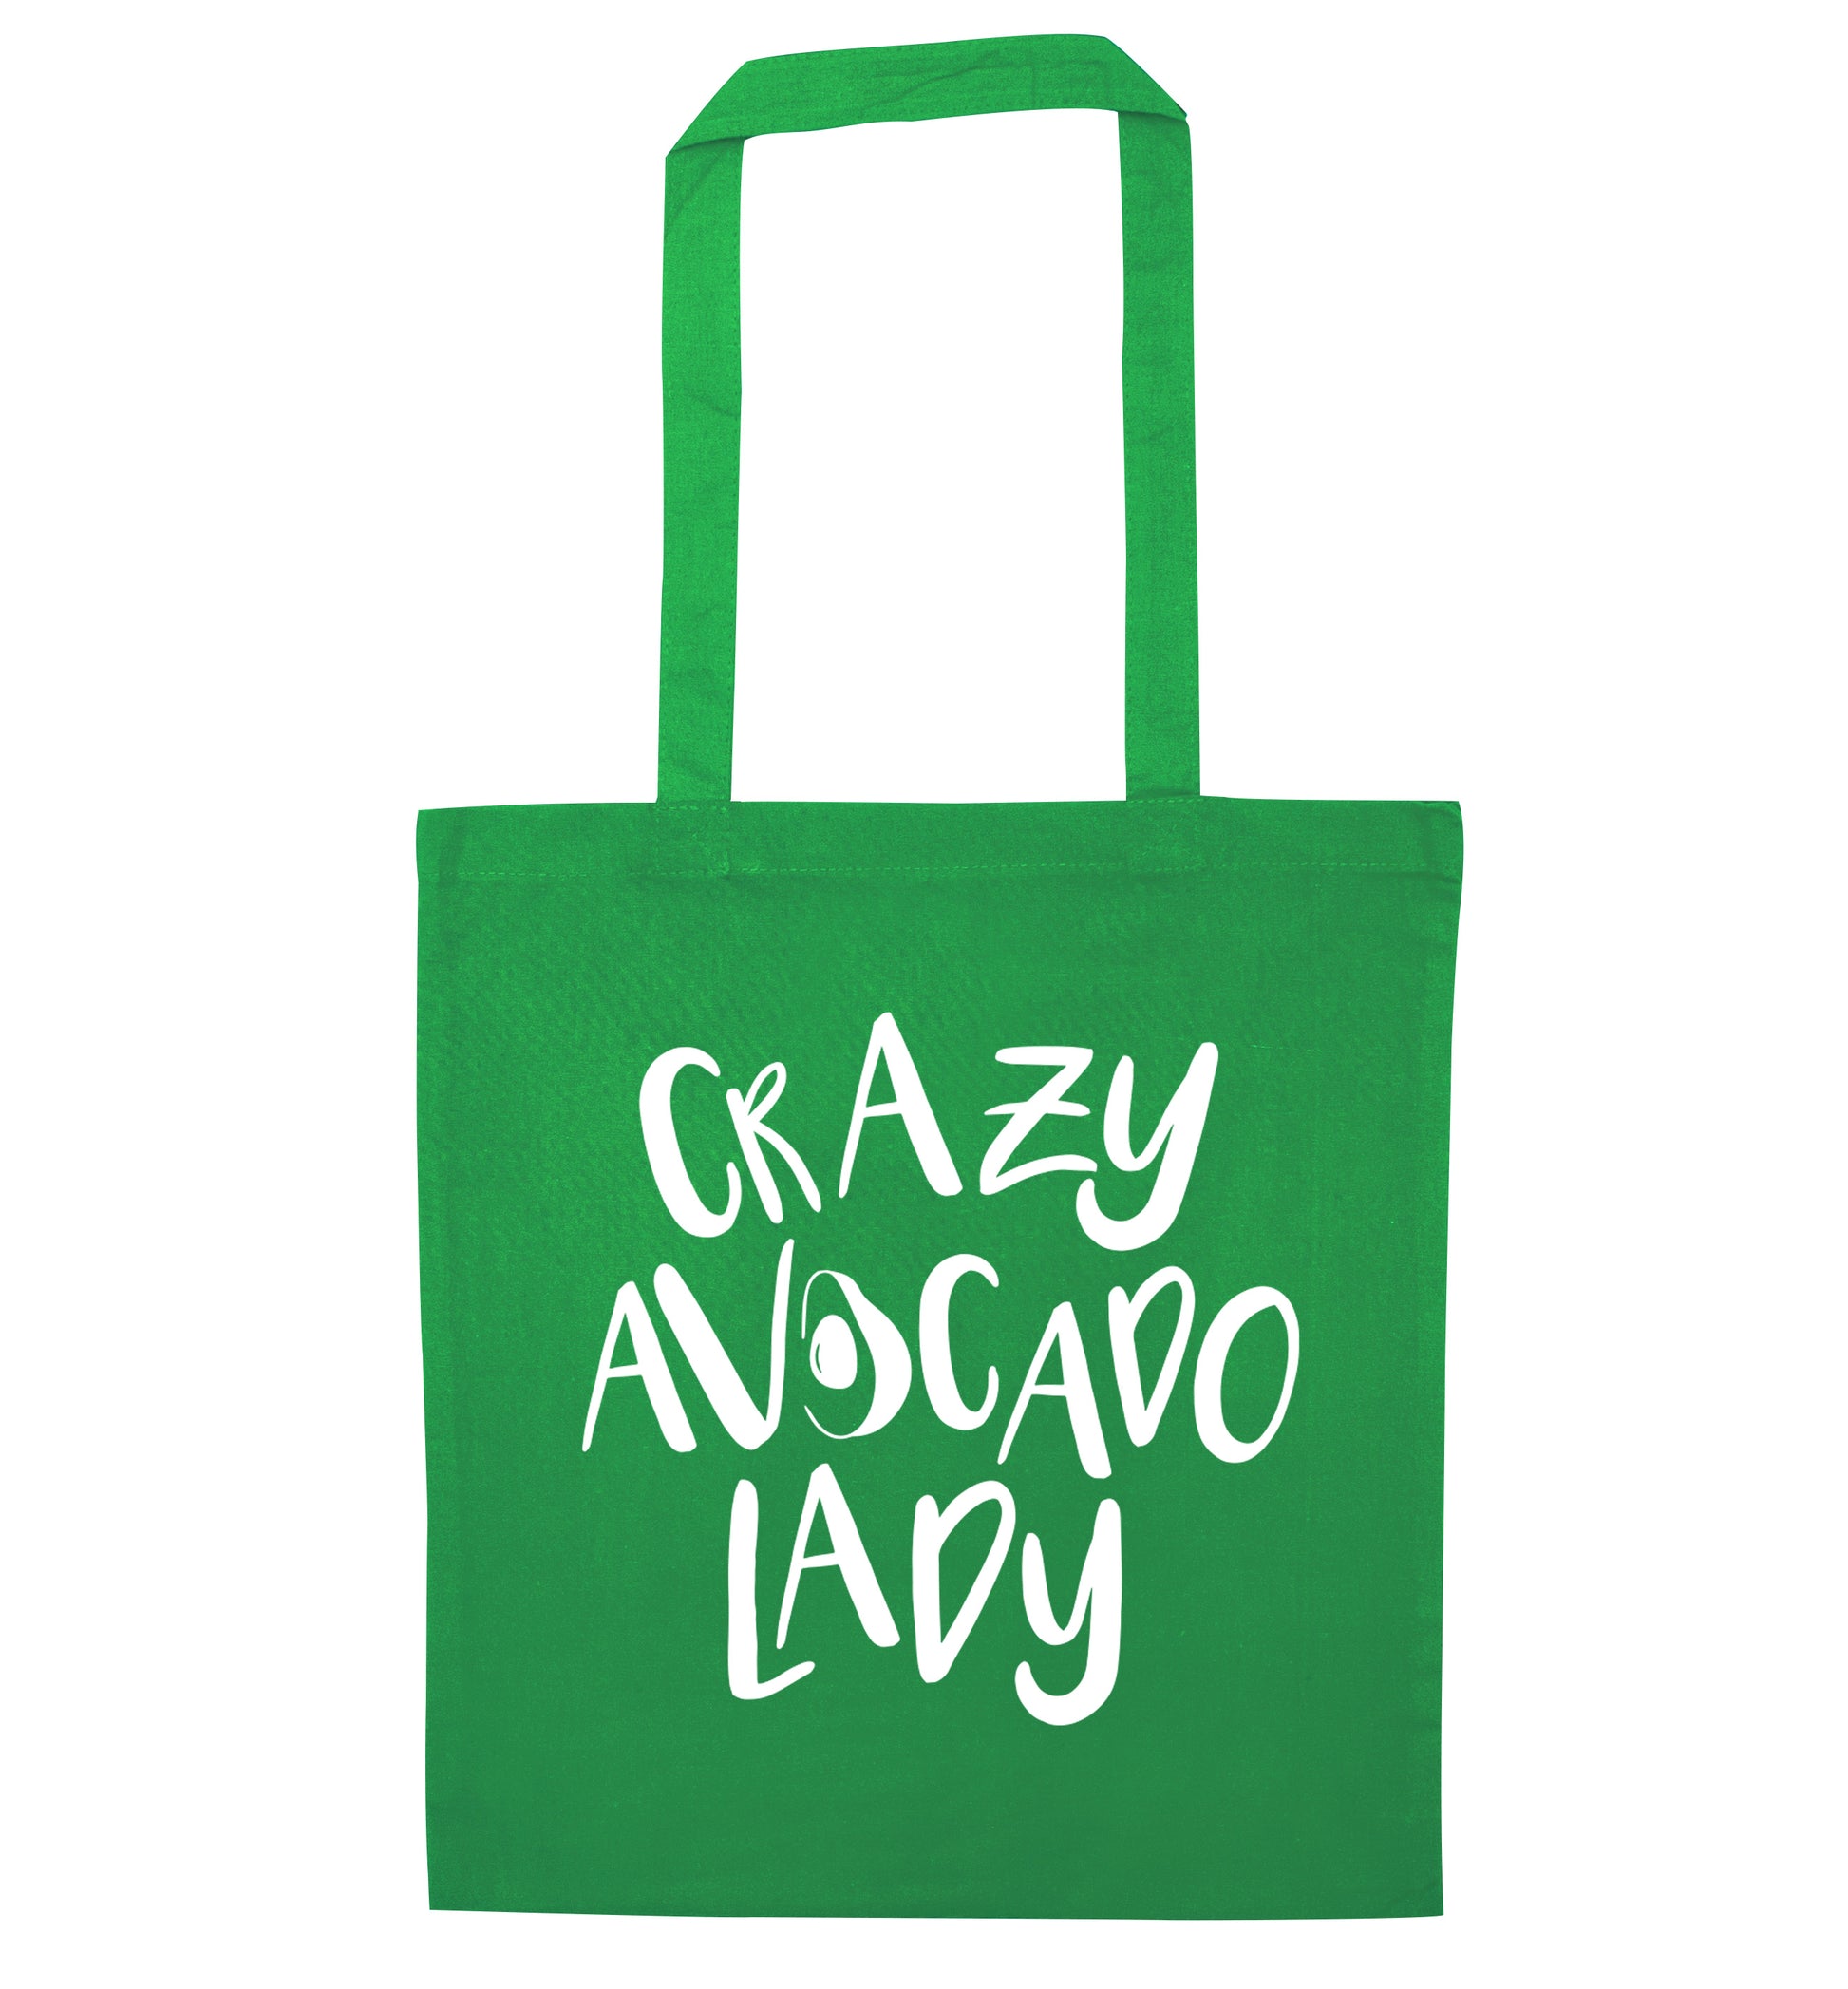 Crazy avocado lady green tote bag